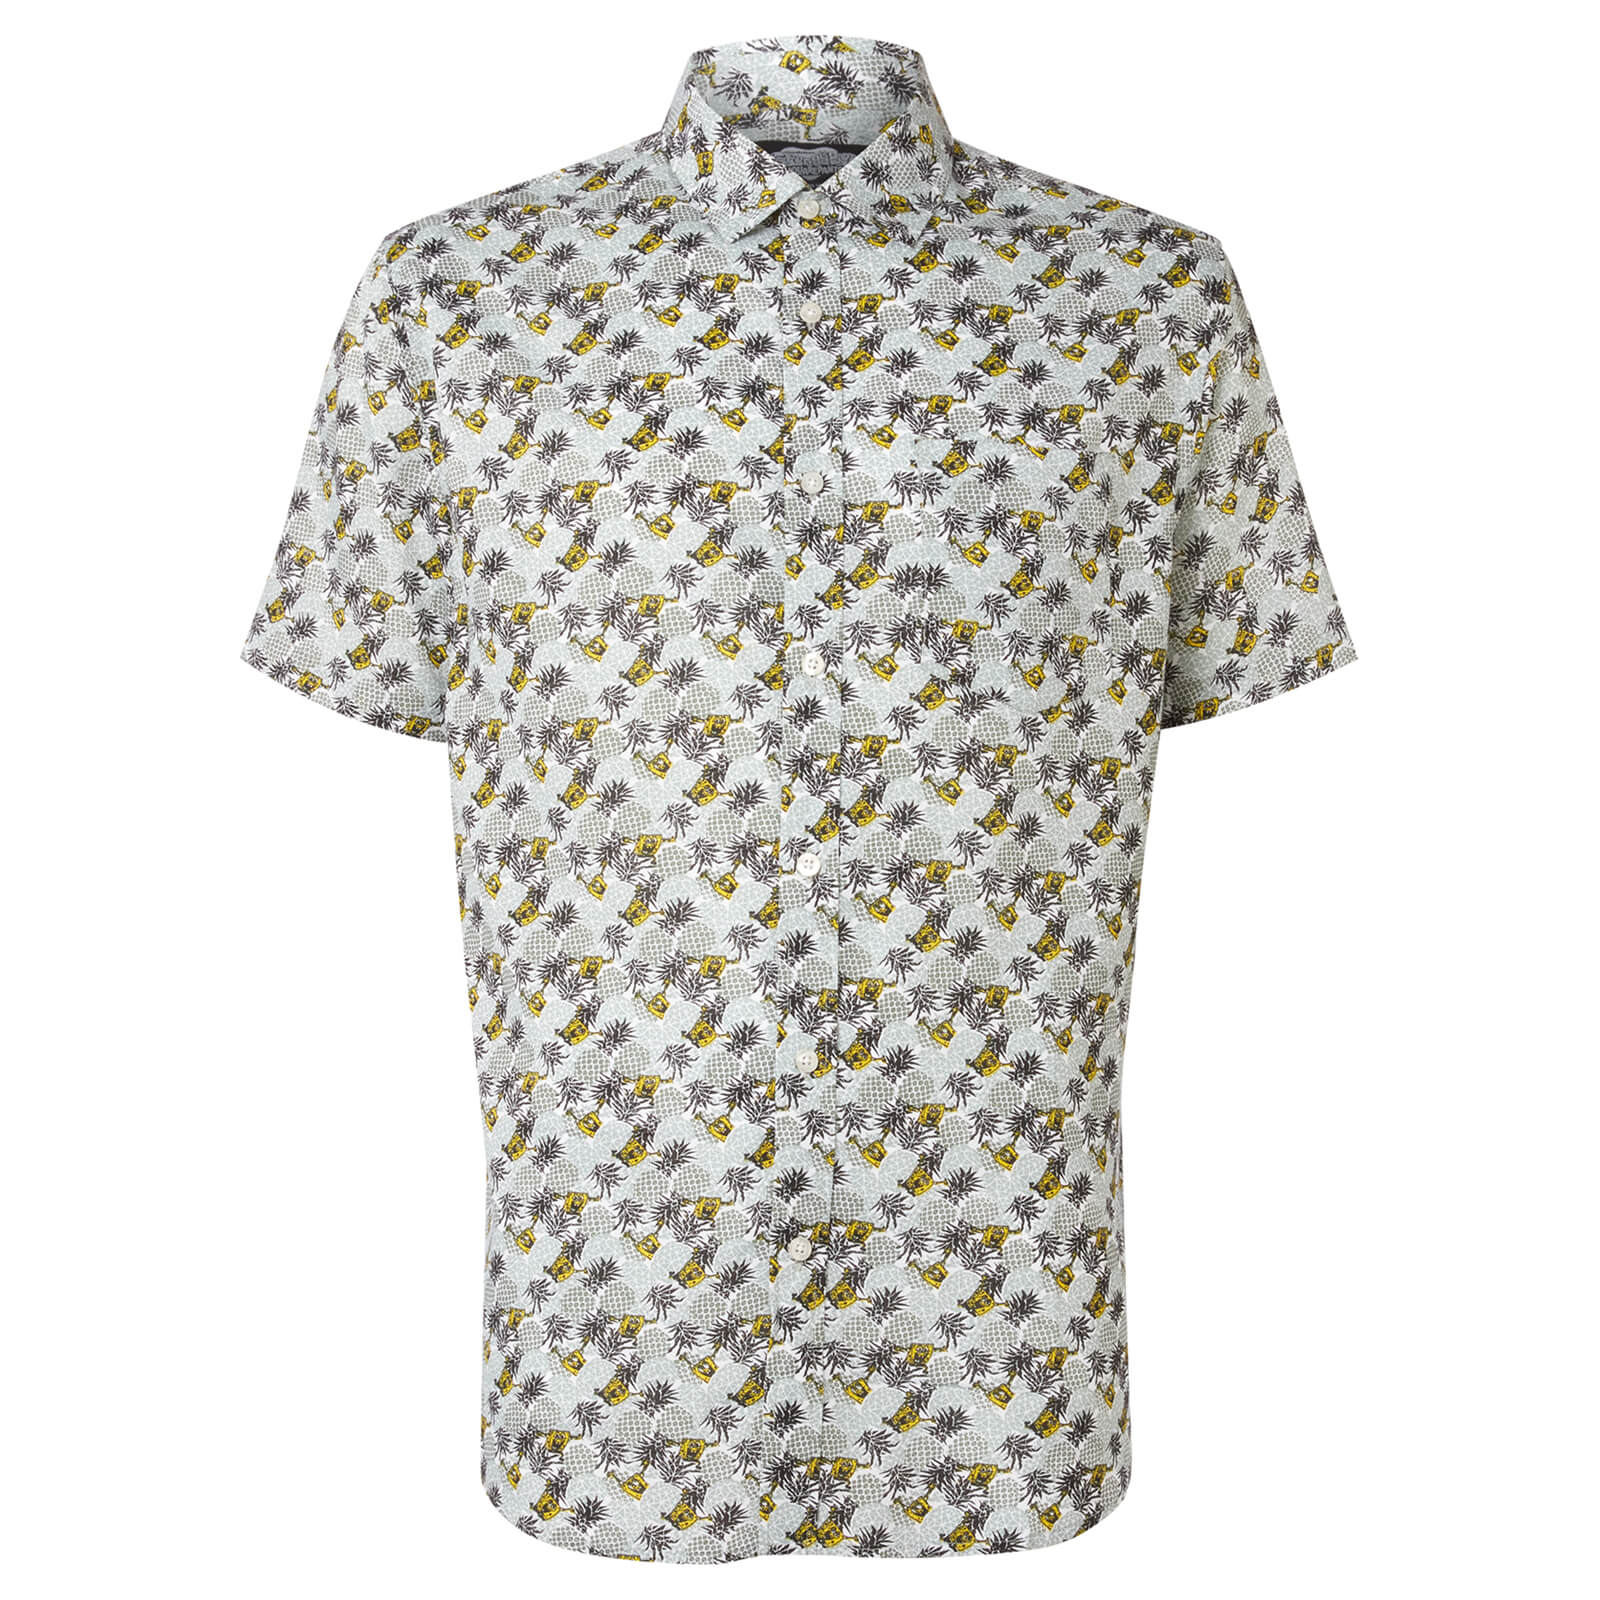 Limited Edition Spongebob Pineapple Printed Shirt - Zavvi Exclusive - S